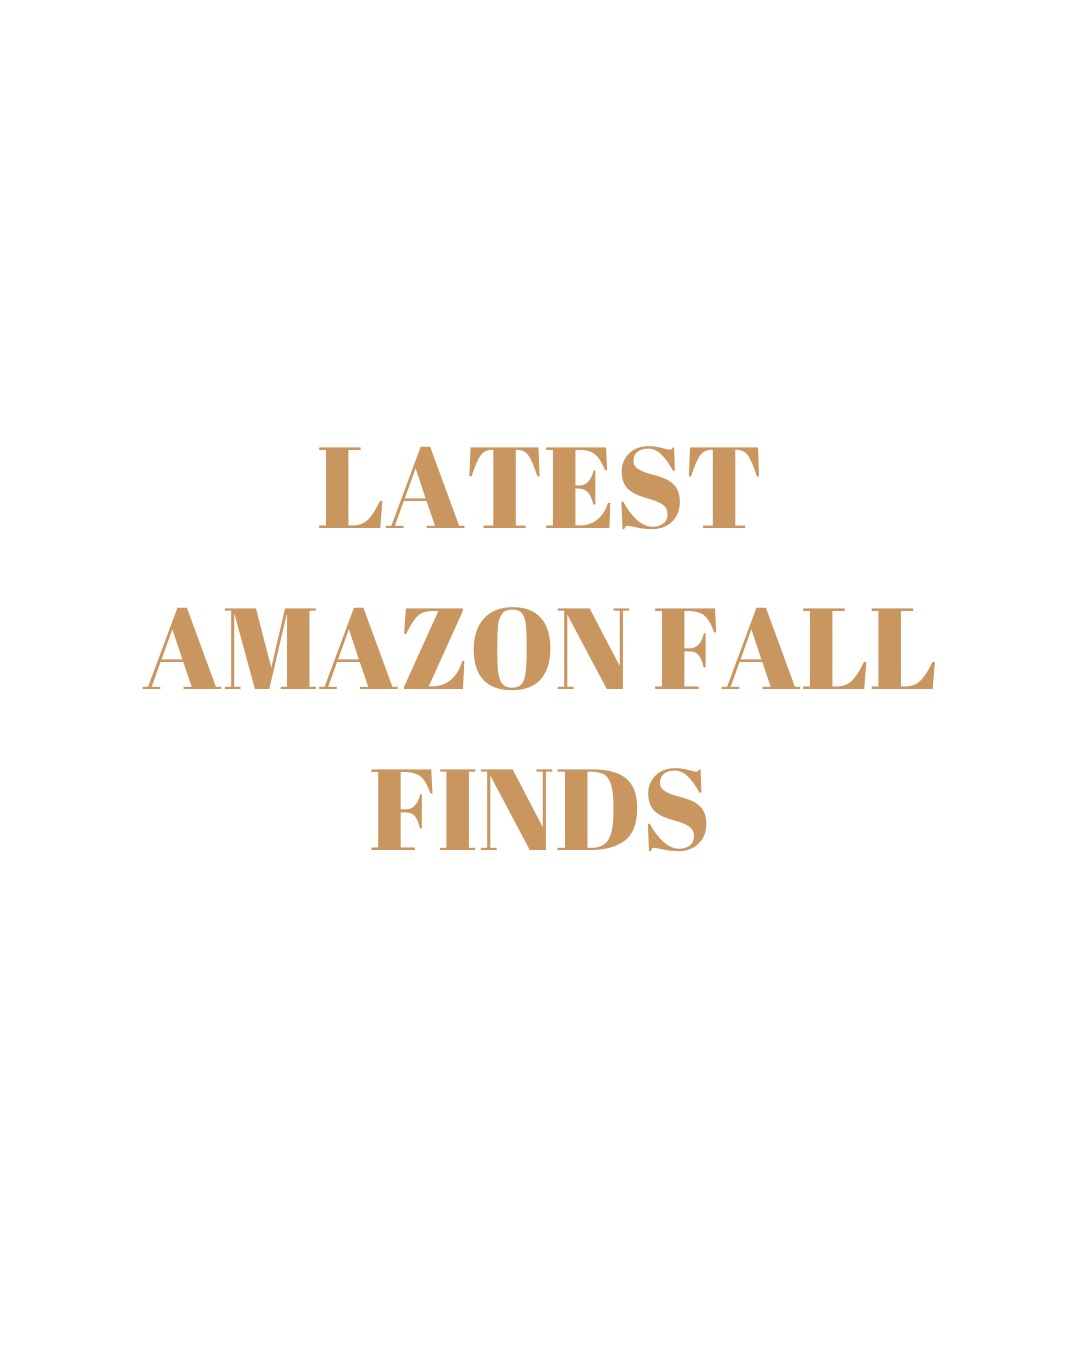 LATEST AMAZON FALL FINDS